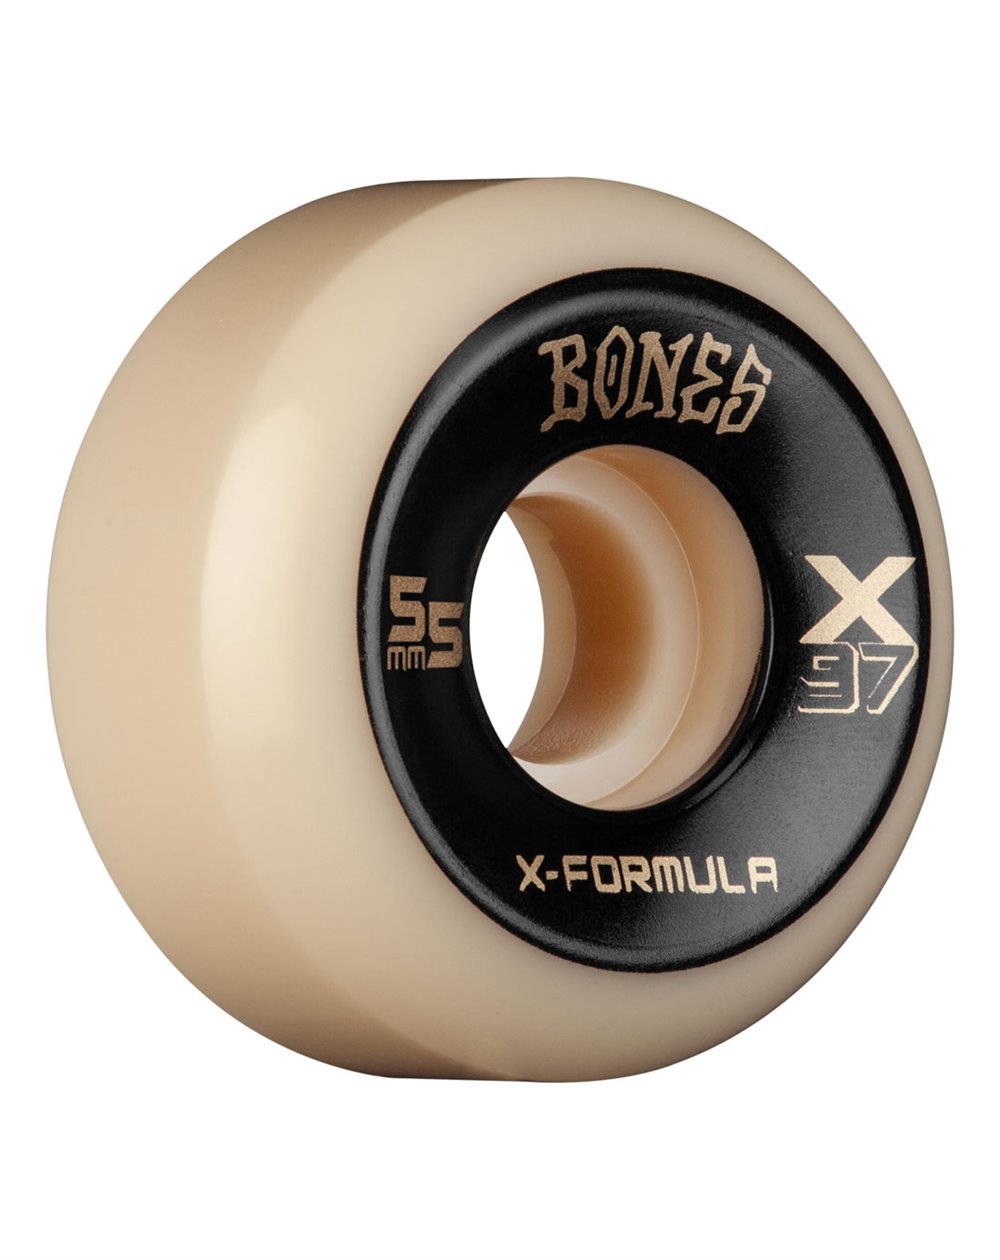 Bones Wheels Roues Skateboard X-Formula V5 Sidecut X-Ninety-Seven 55mm 97A 4 pc